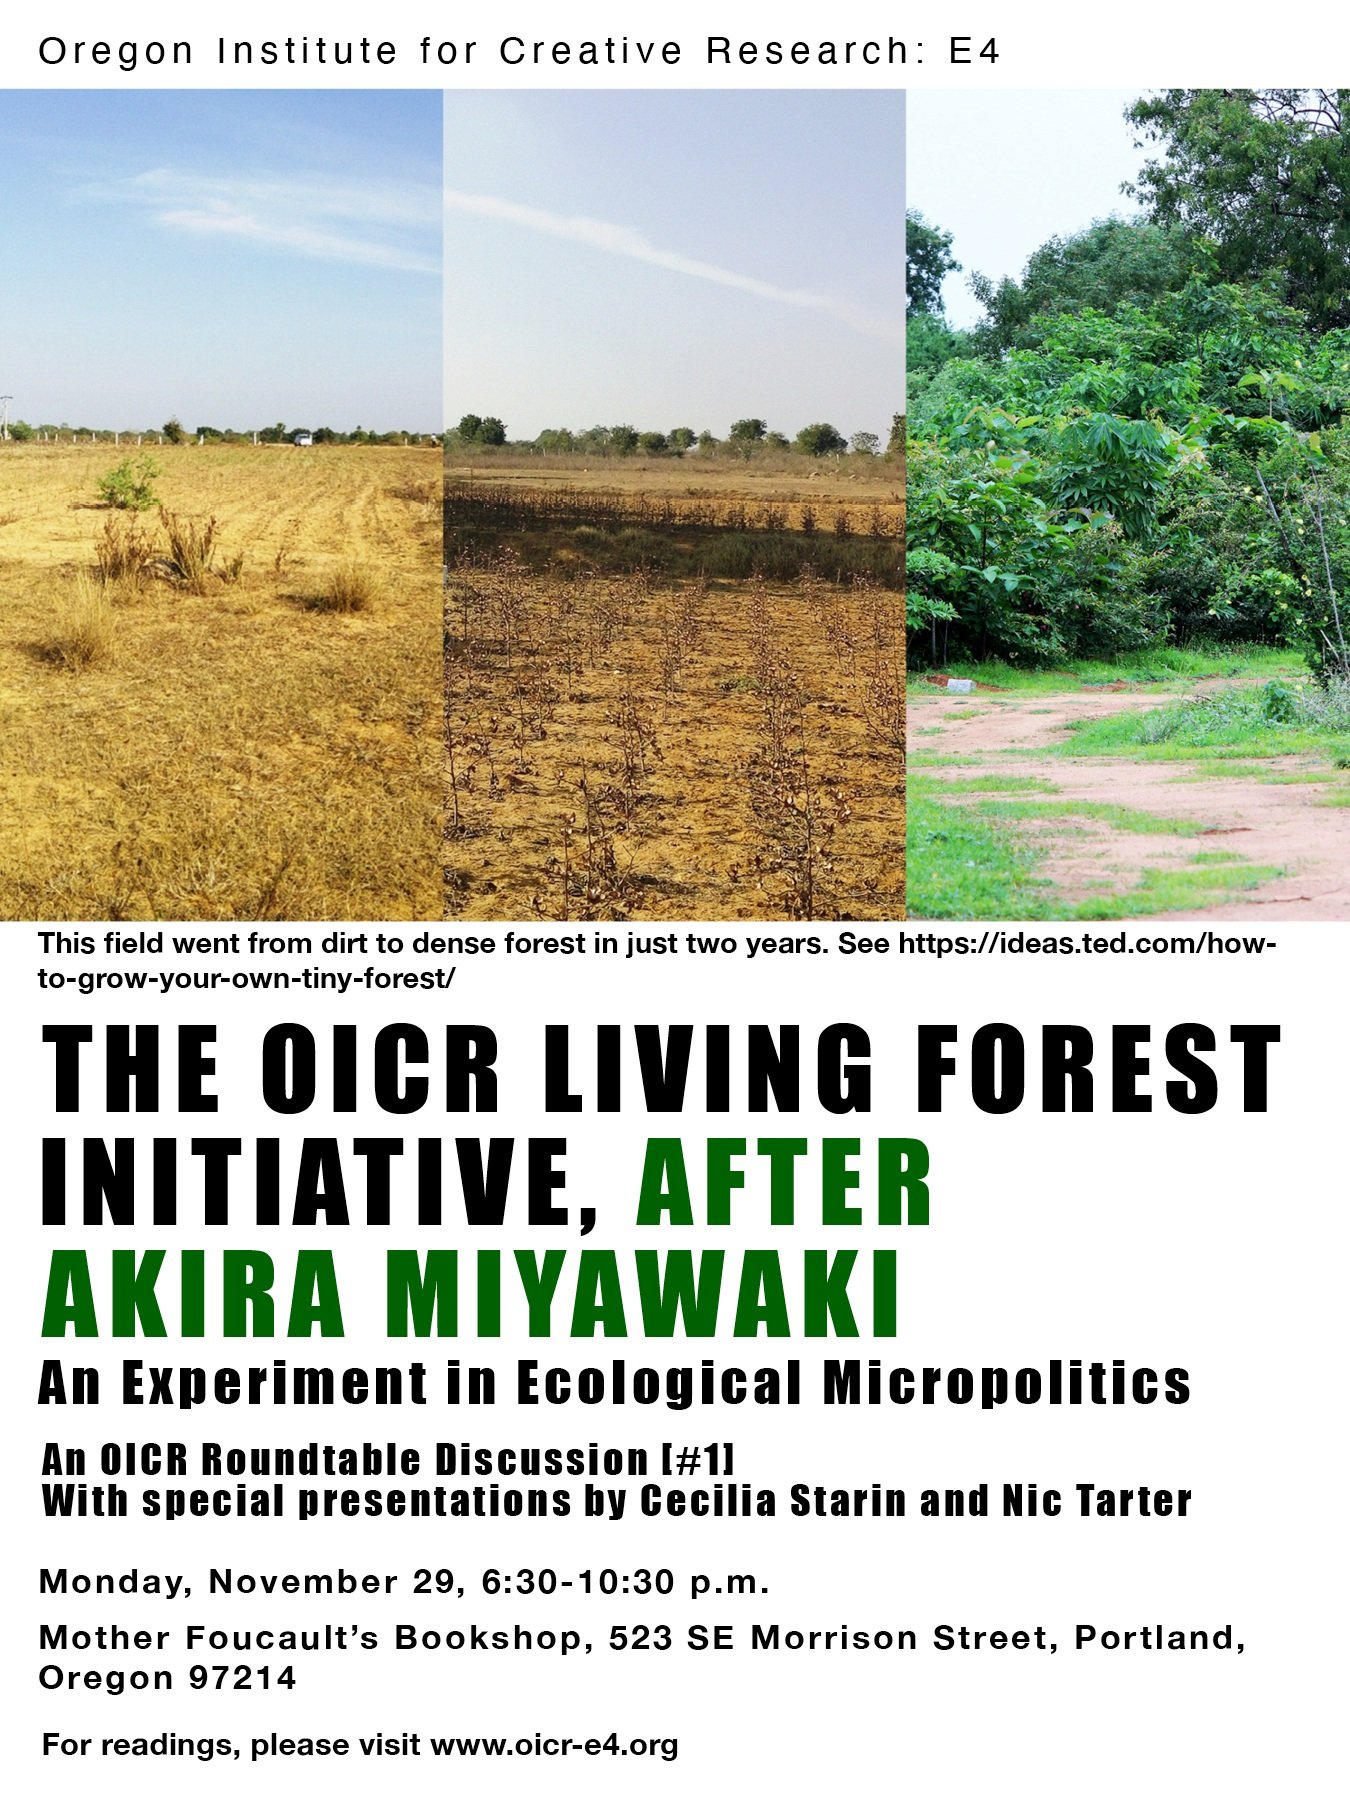 The OICR Living Forest Initiative, After Akira Miyawaki